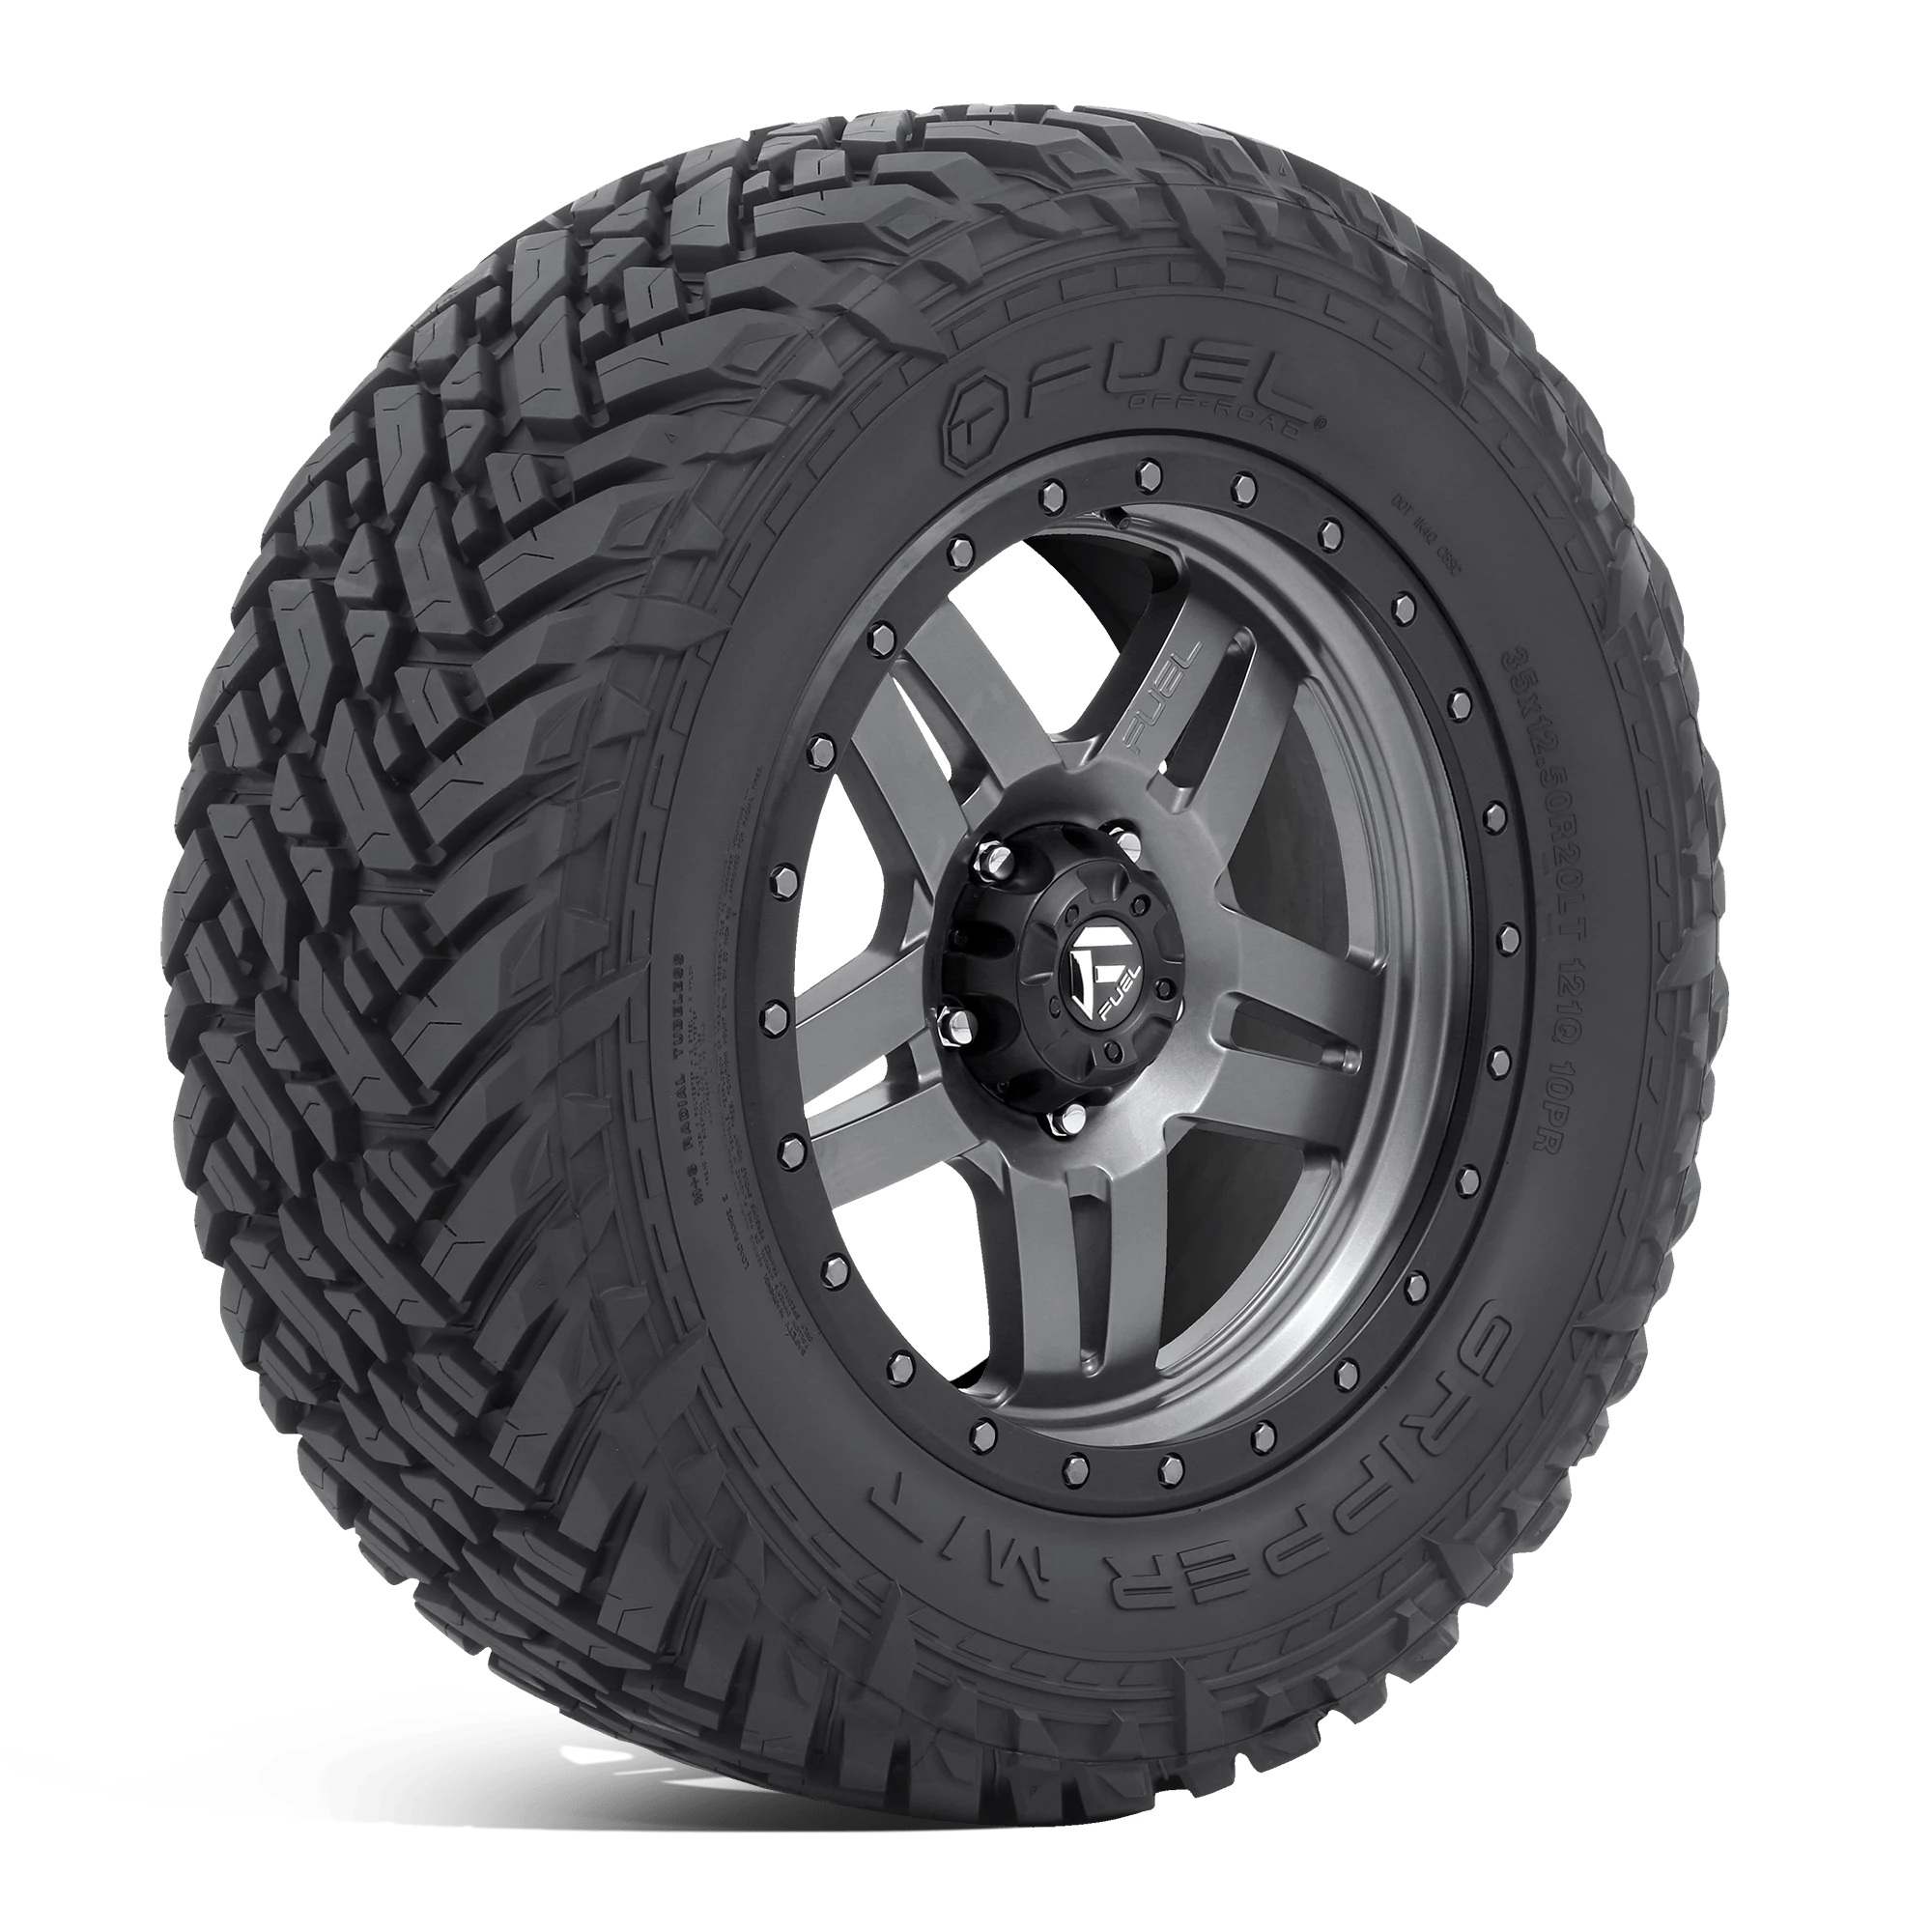 FUEL MUD GRIPPER LT33X12.50R18 Tires